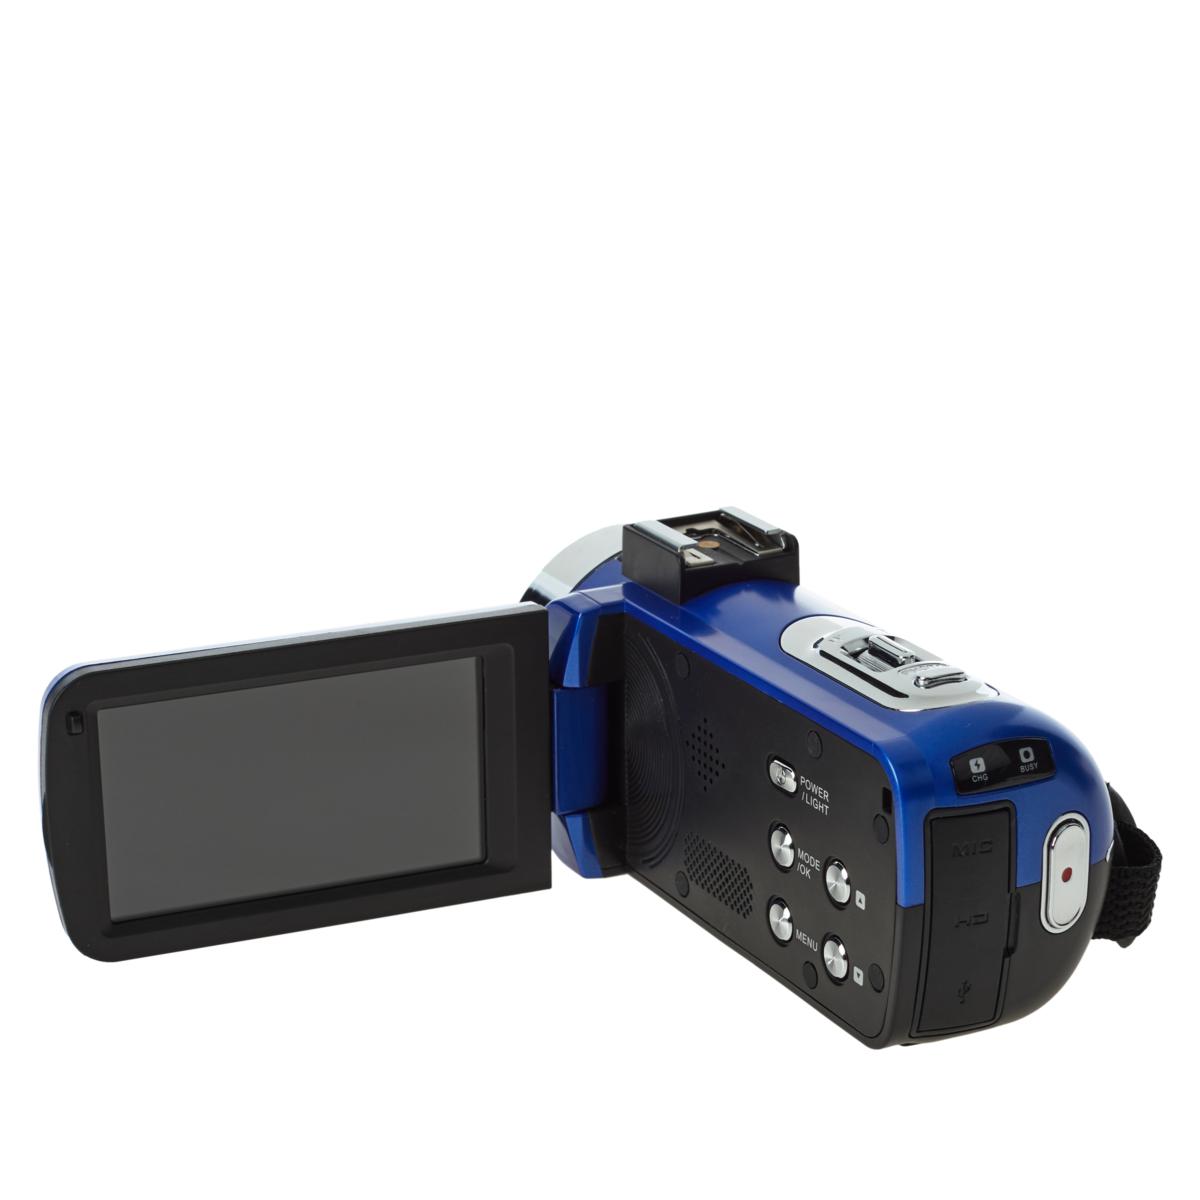 4k-digital-camcorder-id995hd-v1-new-blue-2